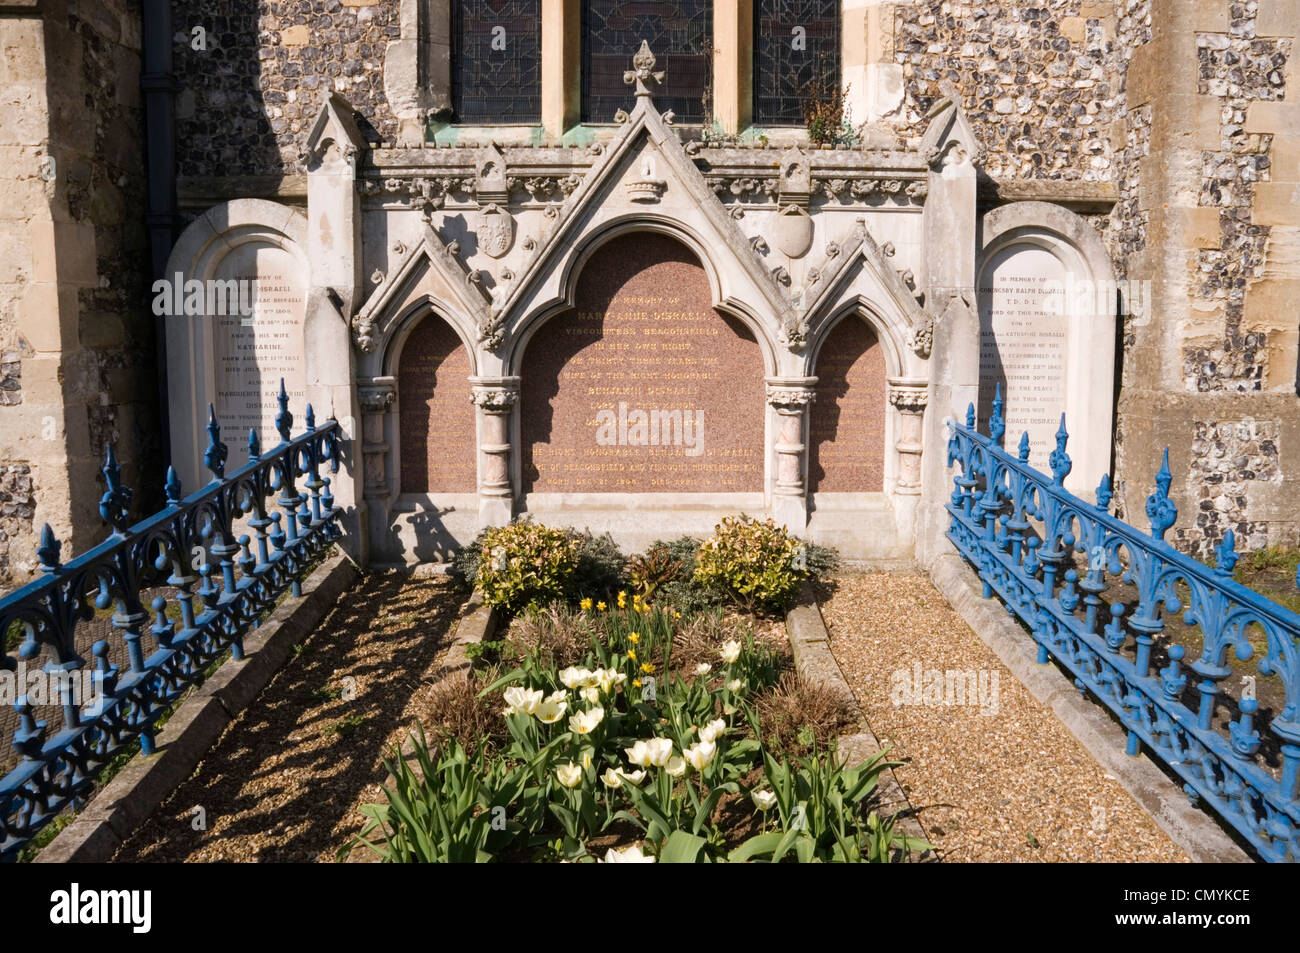 Bucks - Hughenden - St Michael's Church - tumba de Benjamin Disraeli - Lord Beaconsfield -el Primer Ministro a la Reina Victoria. Foto de stock